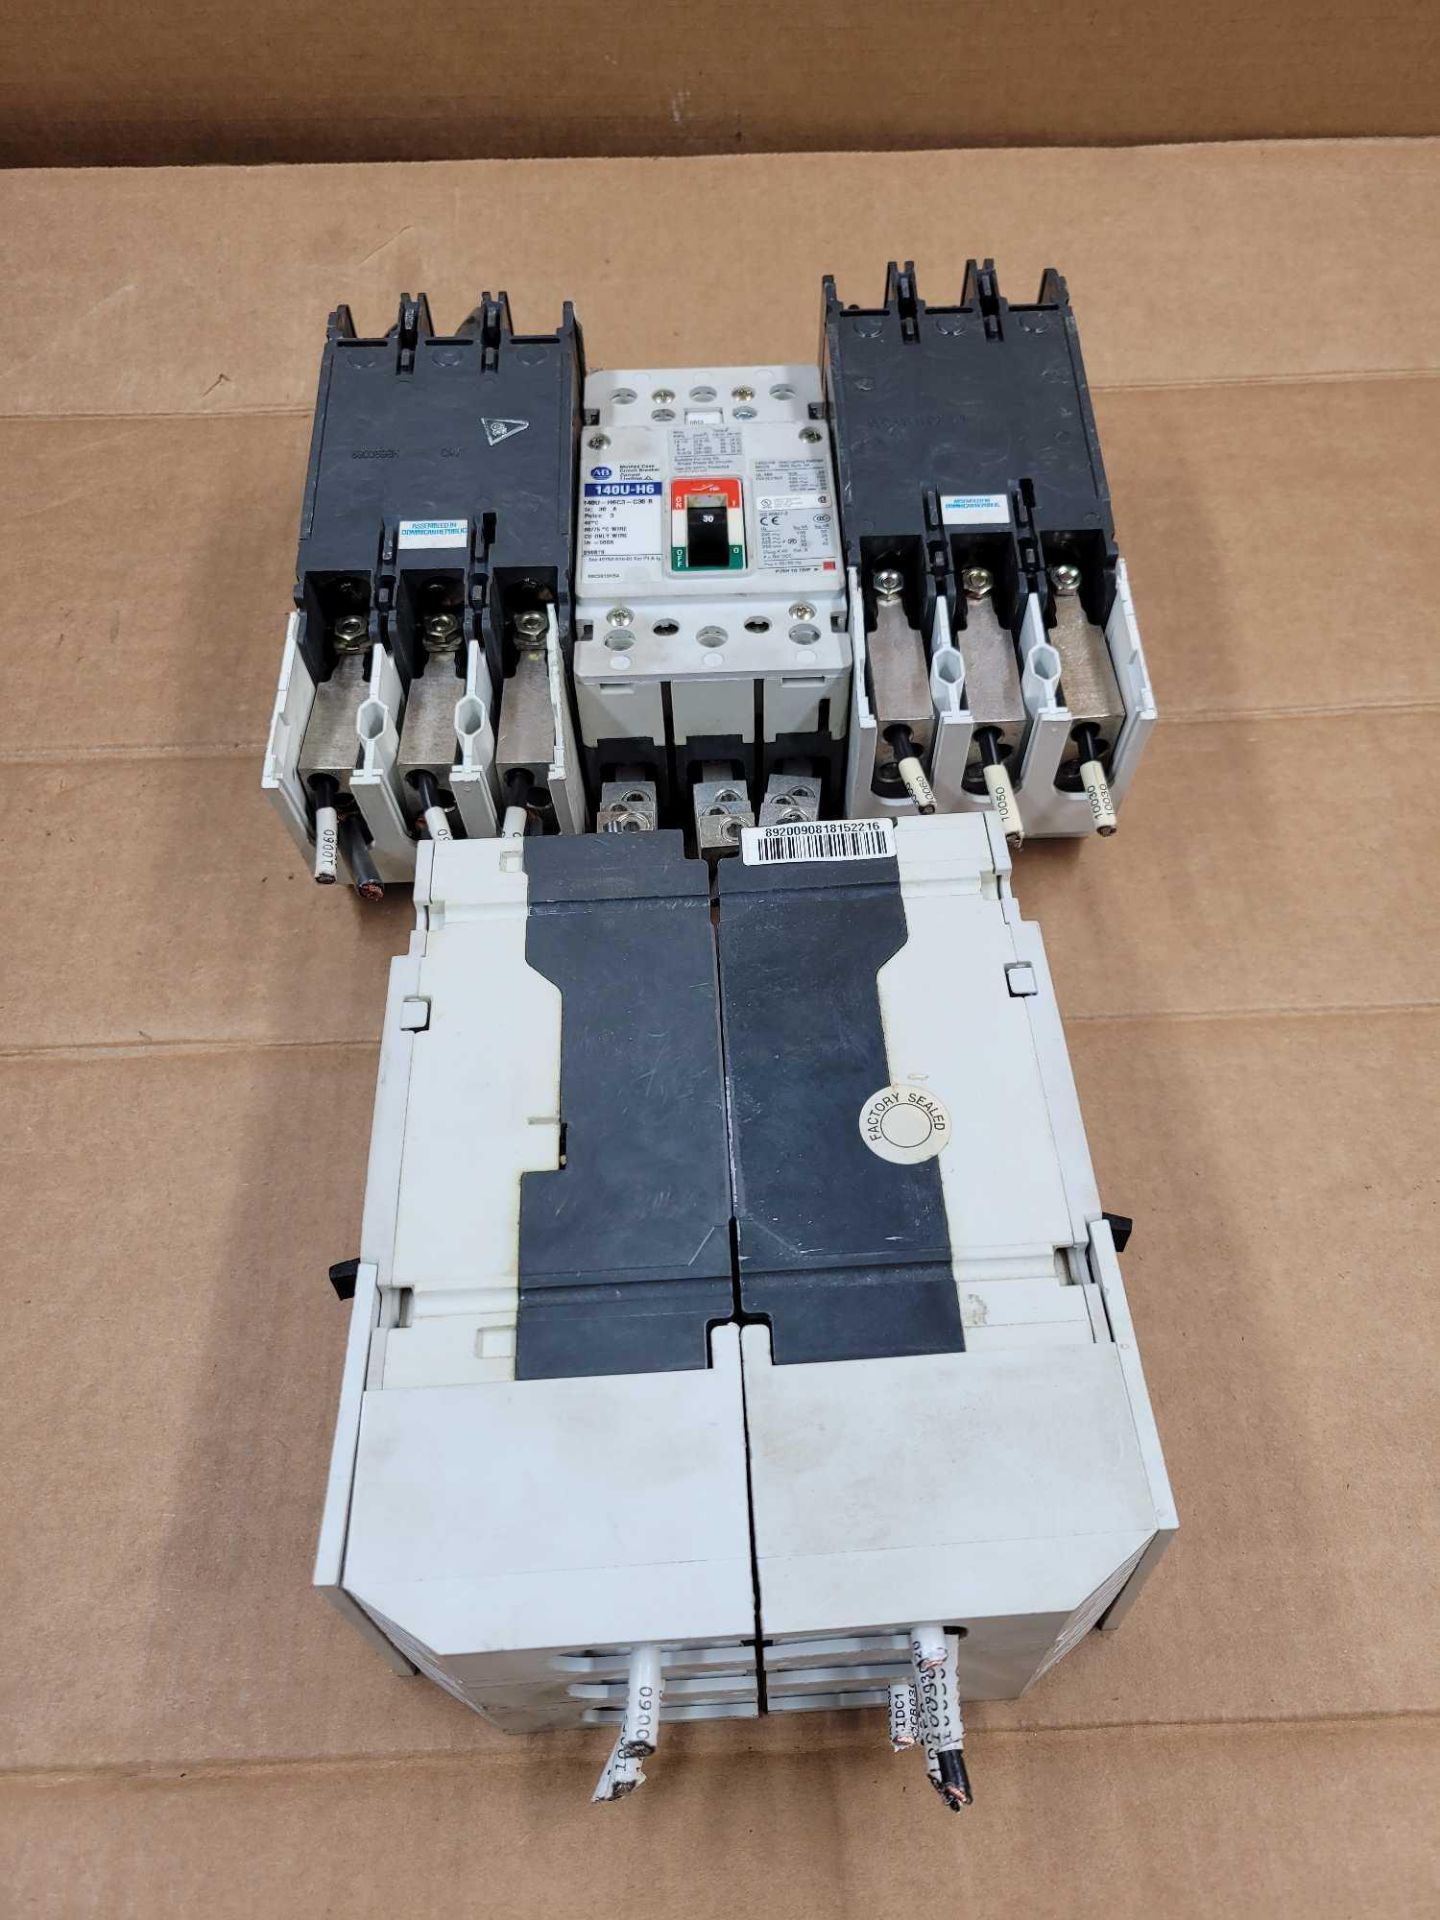 LOT OF 5 ALLEN BRADLEY 140U-H6C3-C30B / 30 Amp Molded Case Circuit Breaker  /  Lot Weight: 13.2 lbs - Image 7 of 7